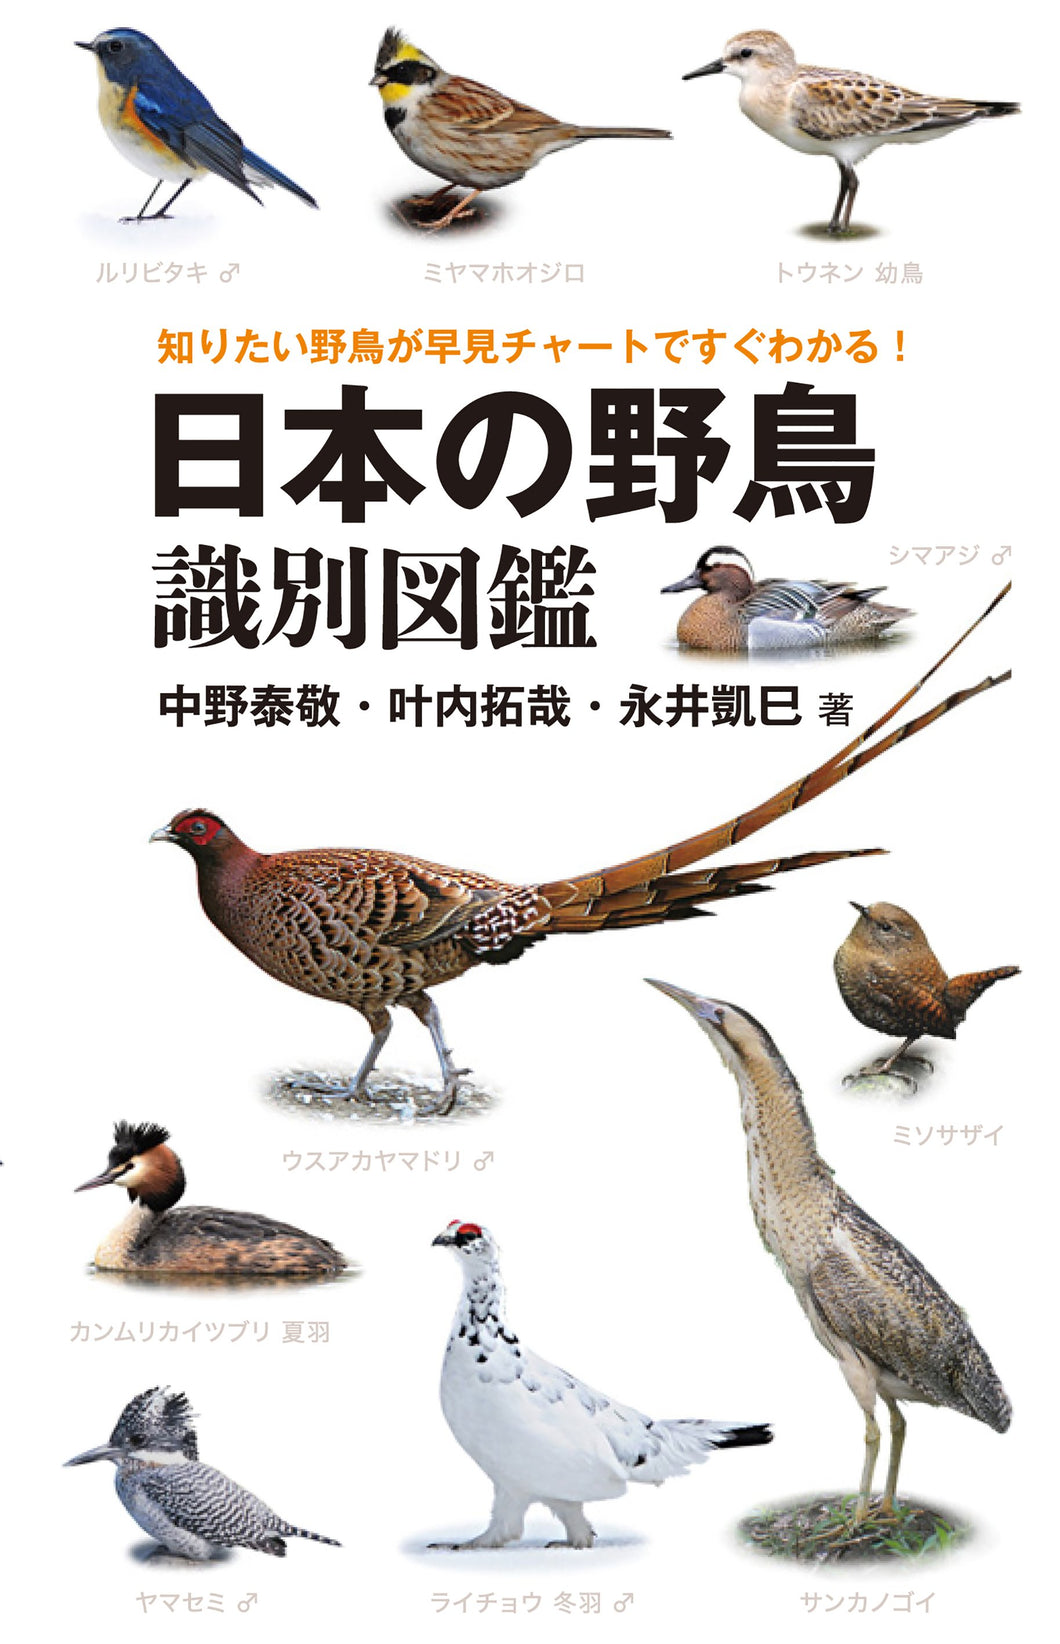 Japanese wild bird identification book